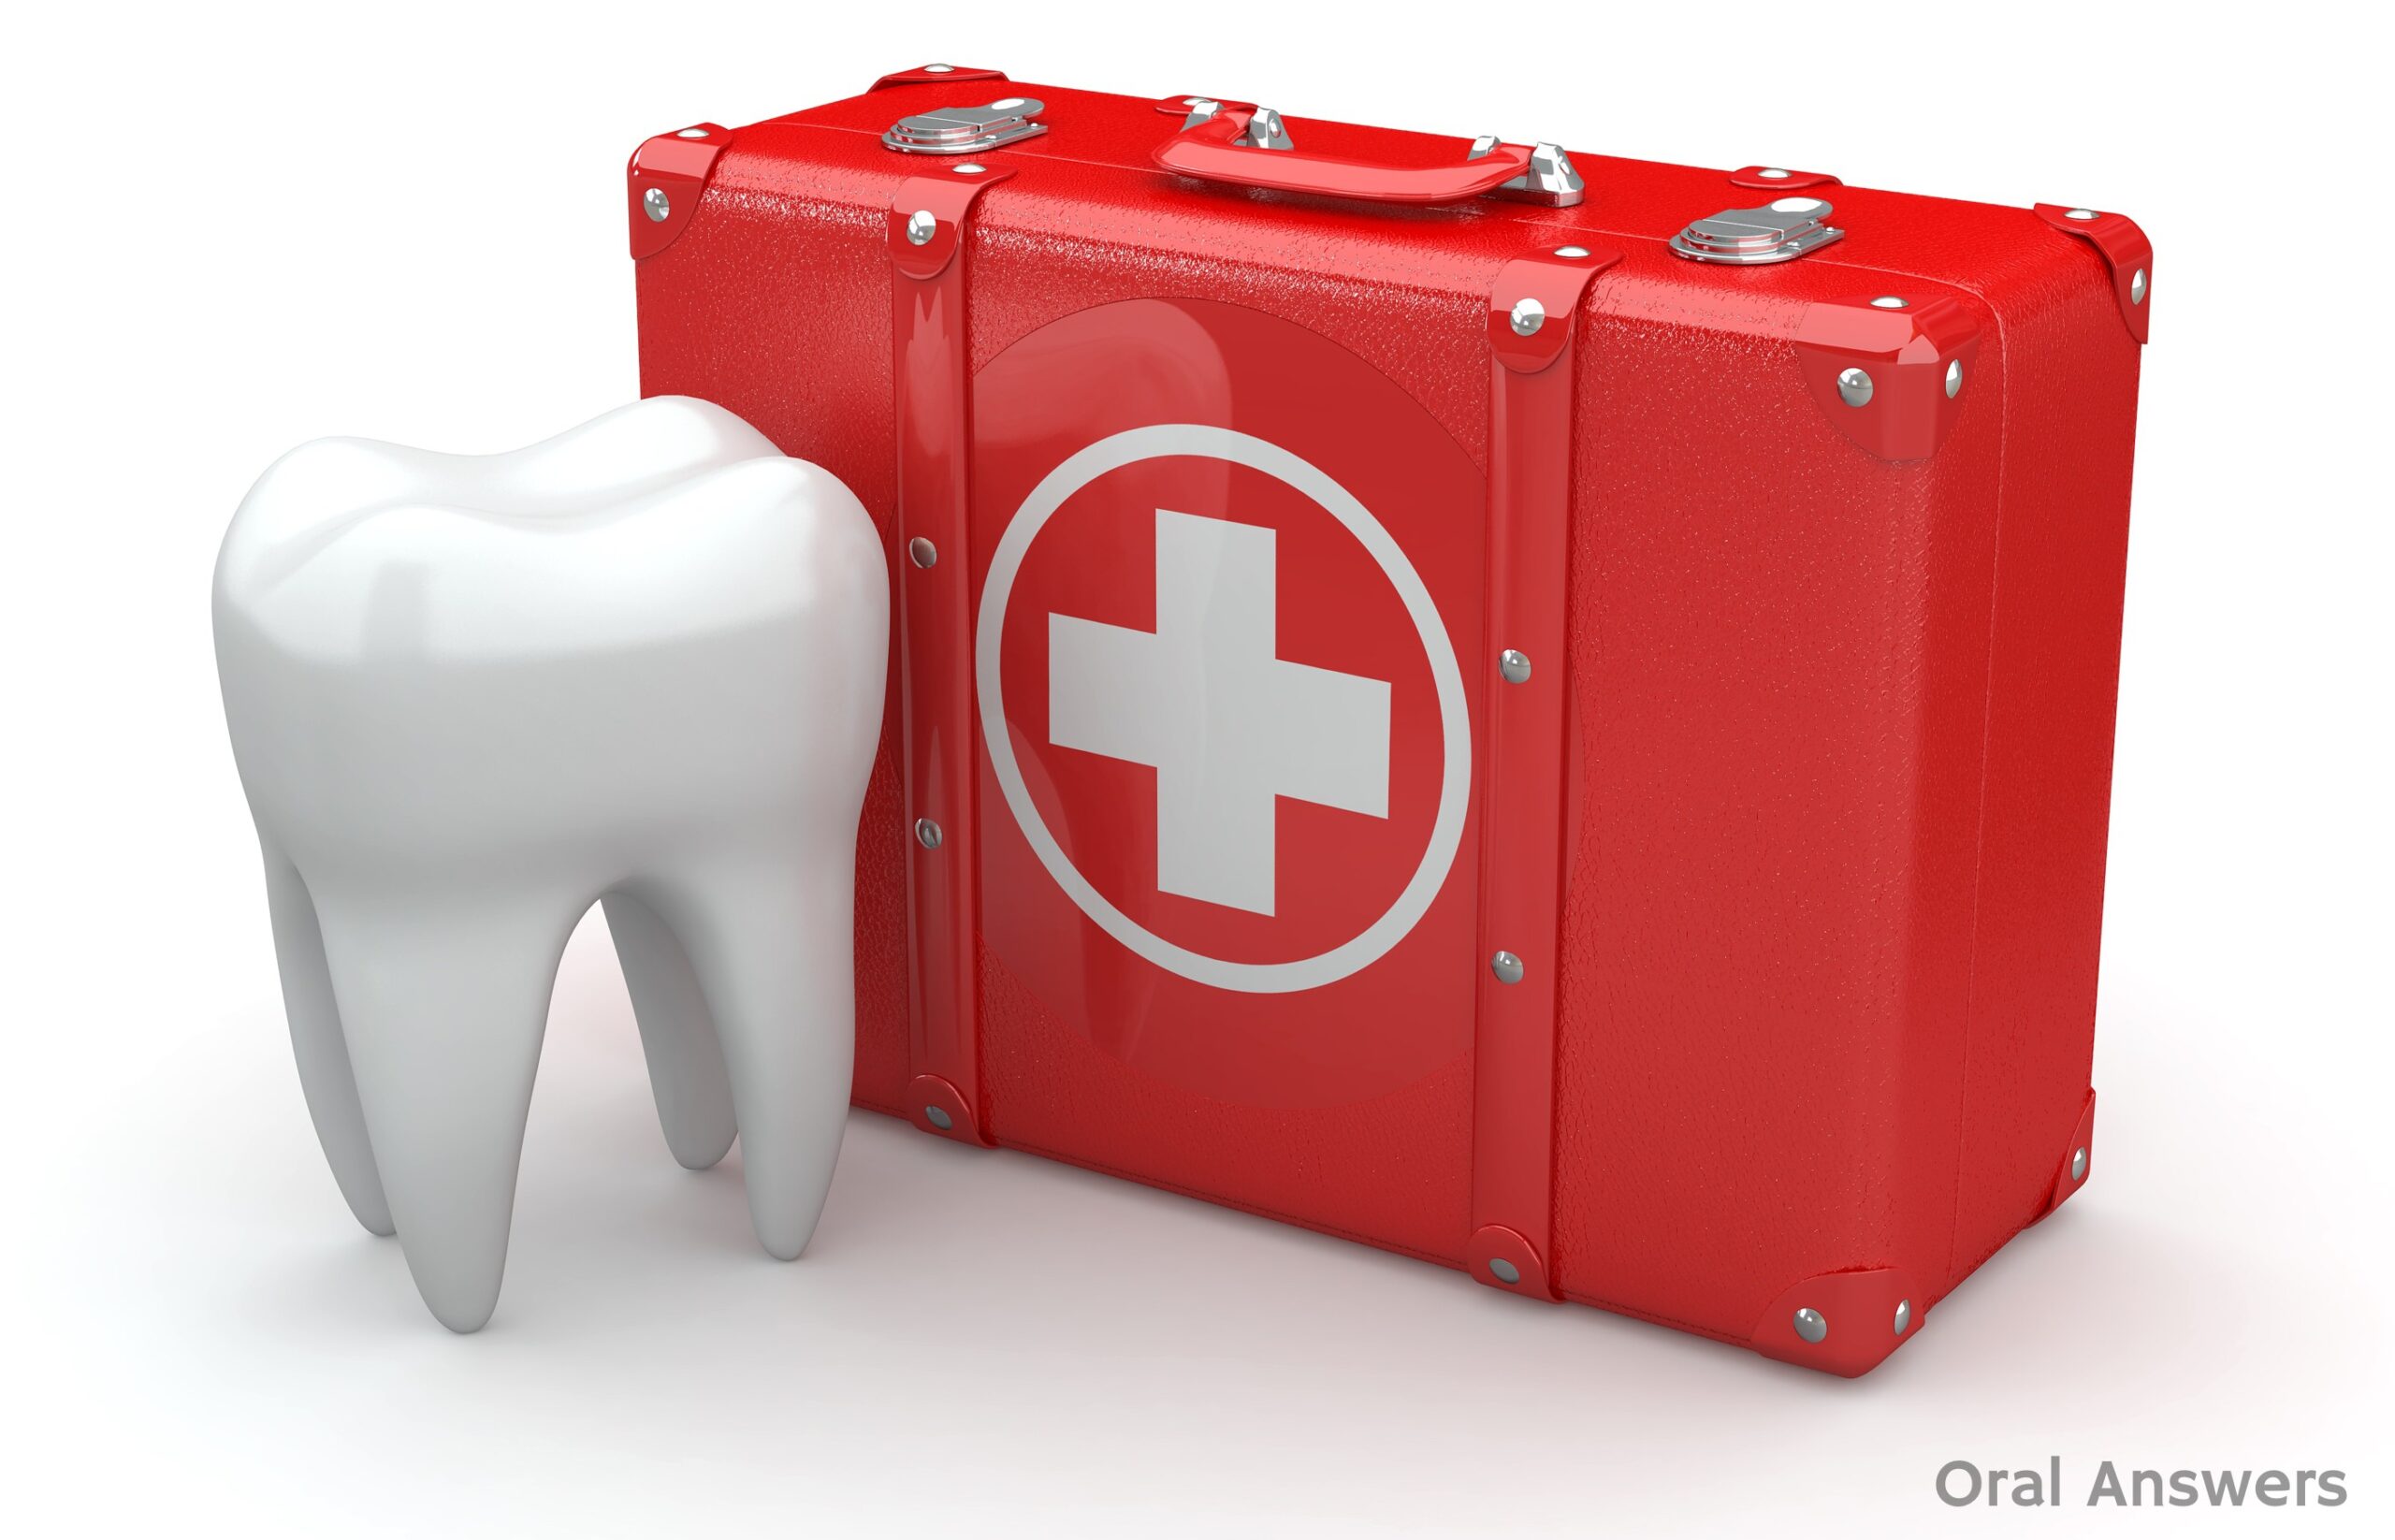 داروهای اورژانس مطب دندانپزشکی کدامند؟